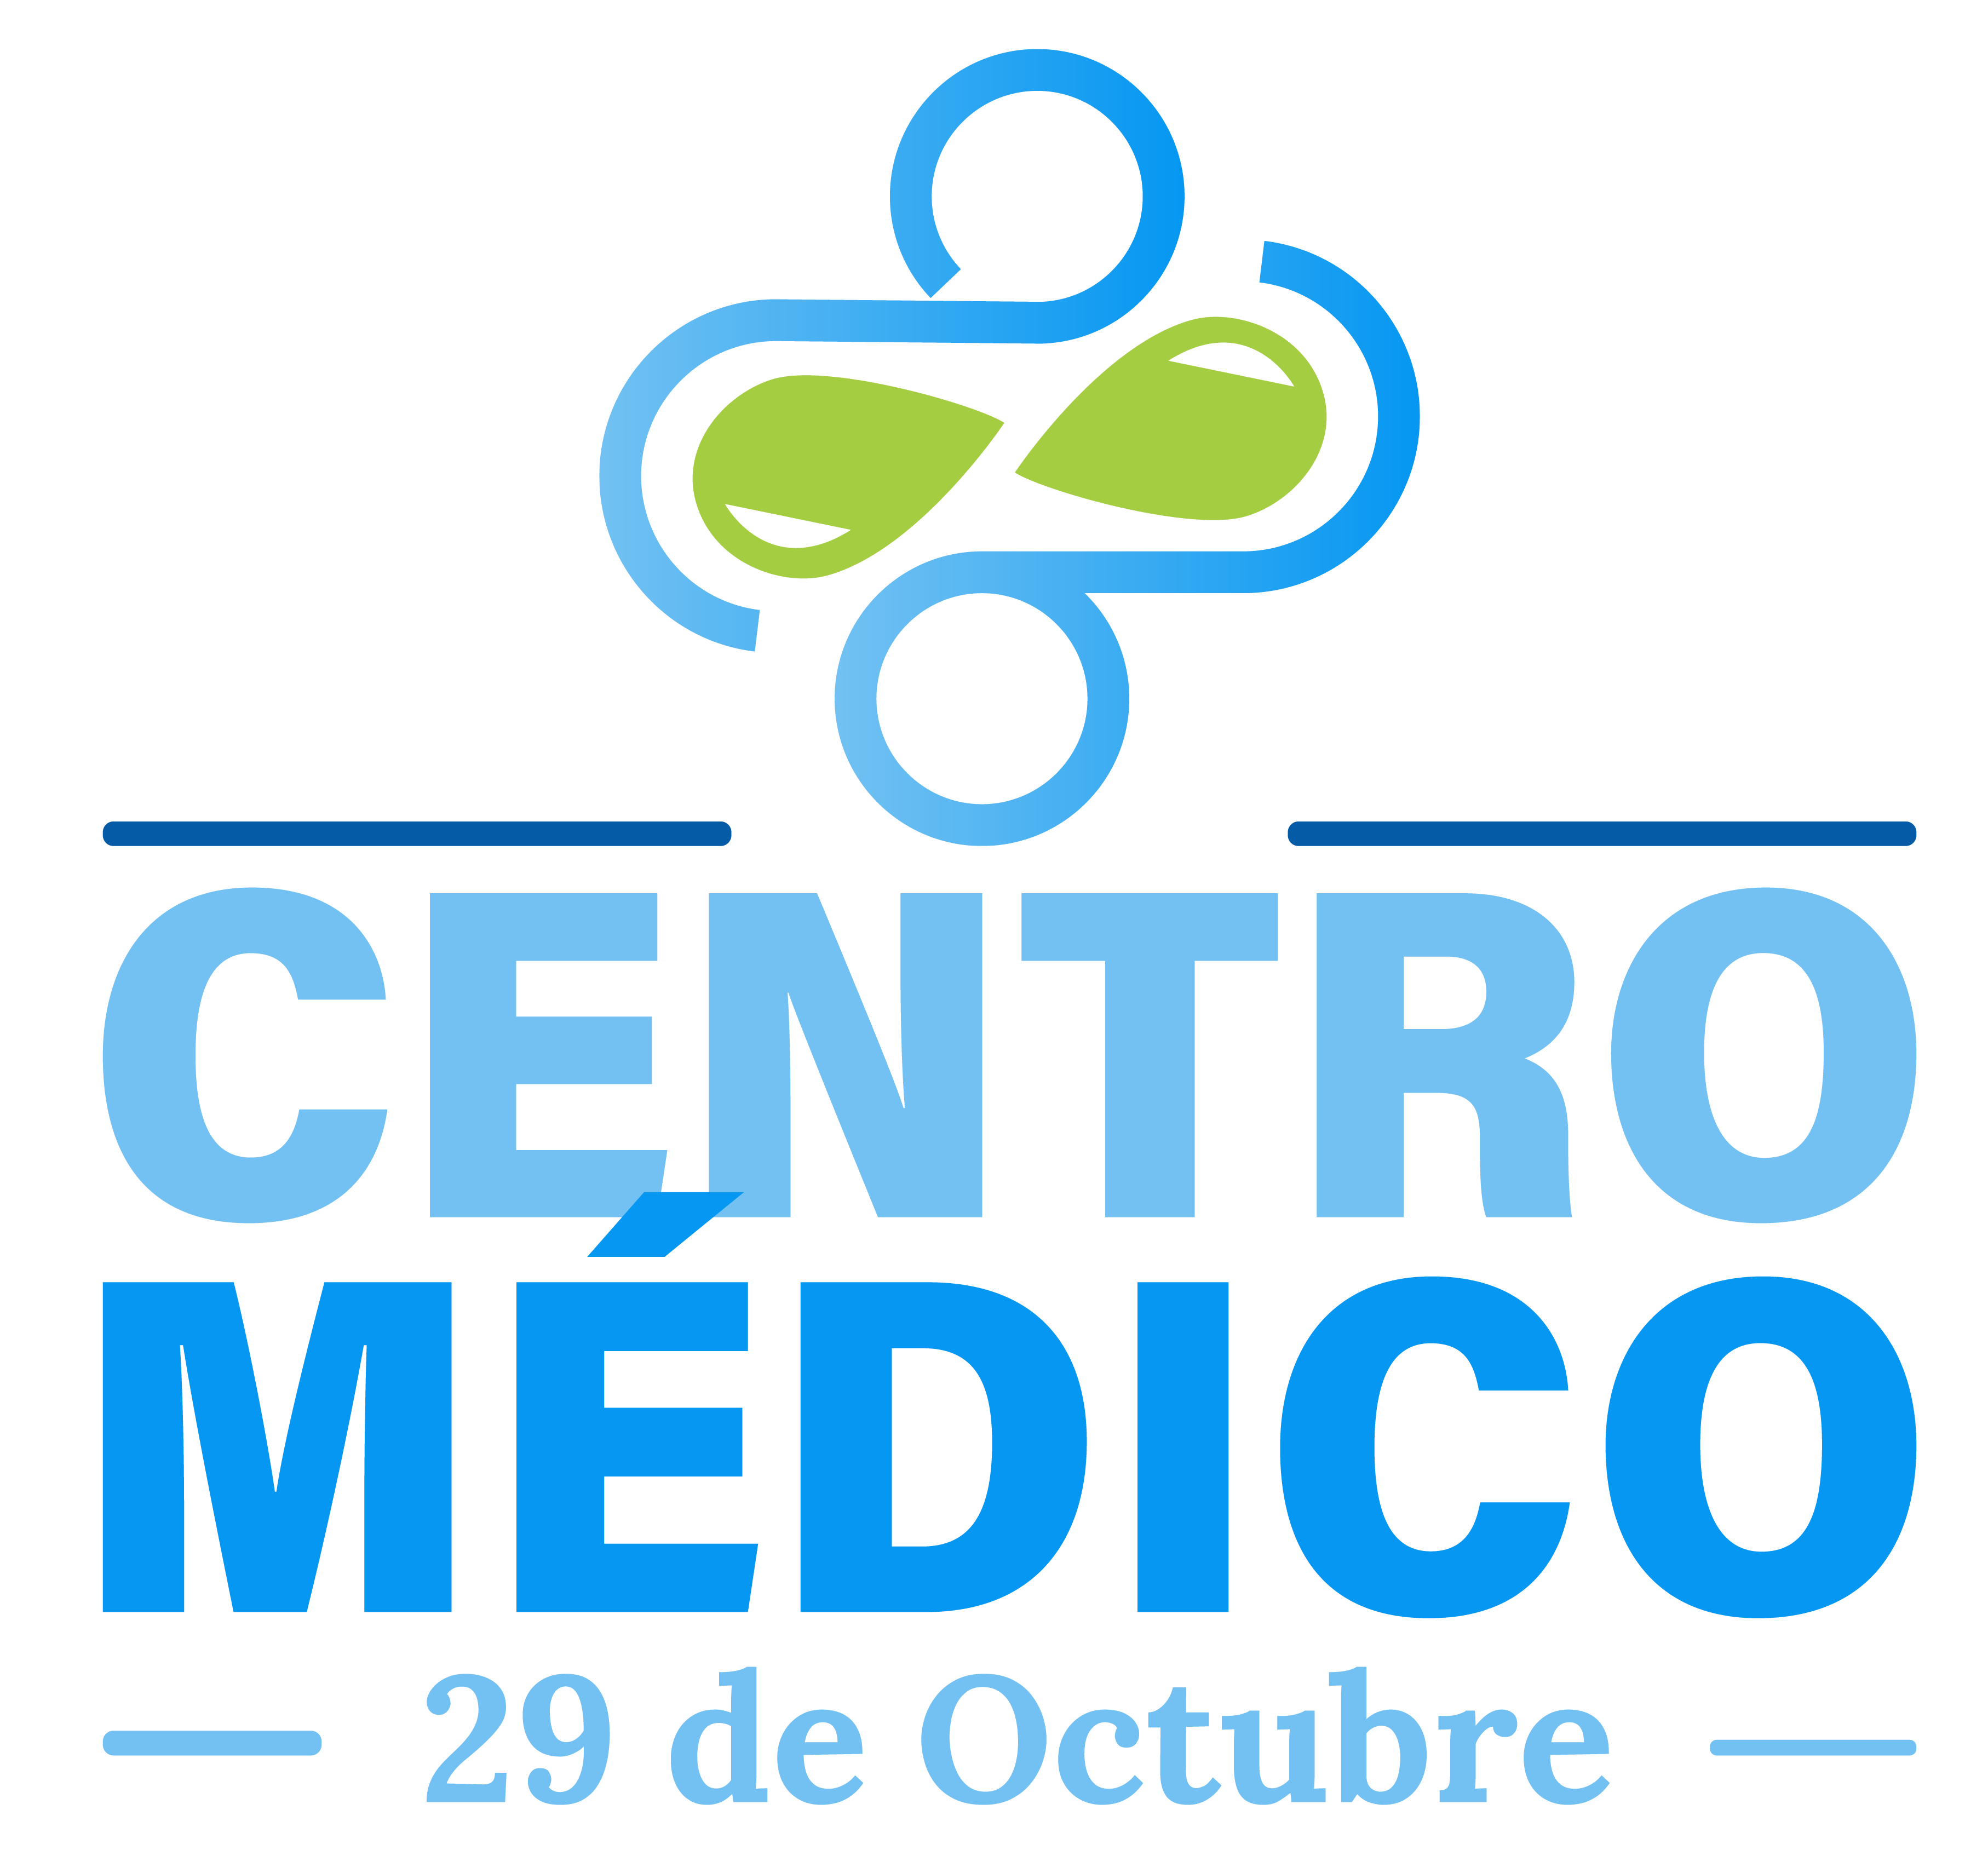 Centro Medico 29